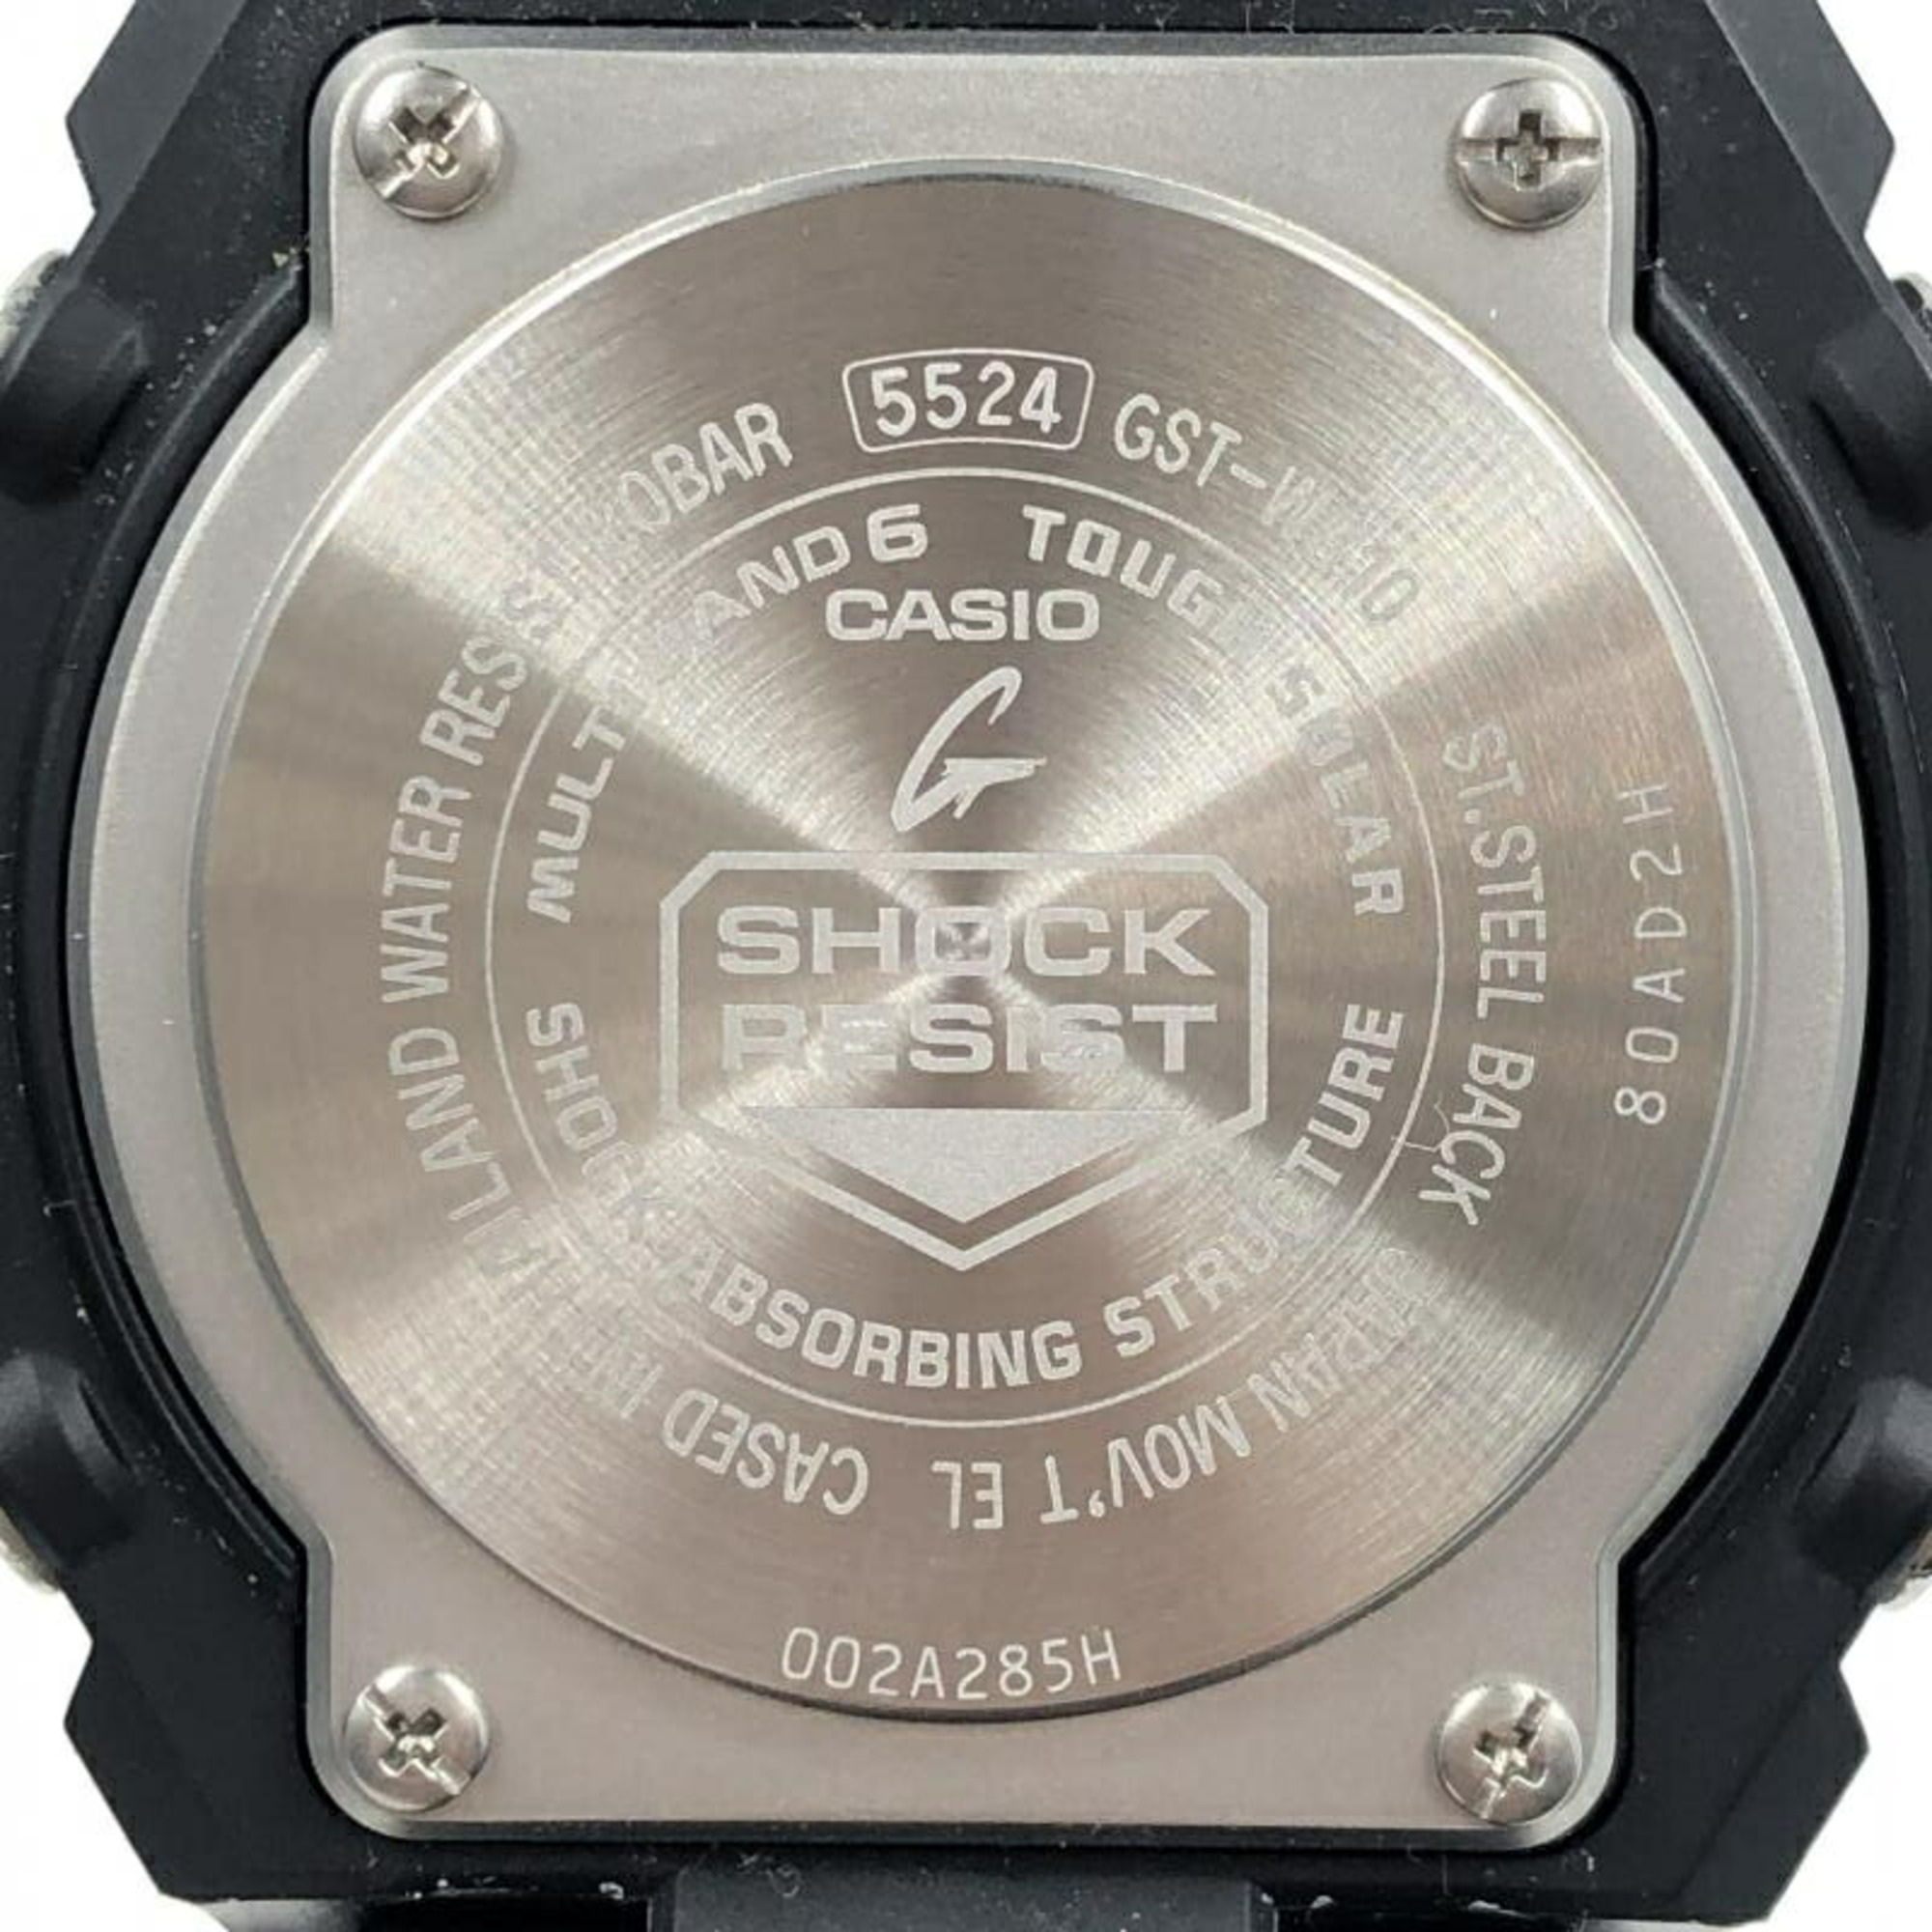 Casio G-SHOCK Watch GST-W310-1AJF Solar G-Shock